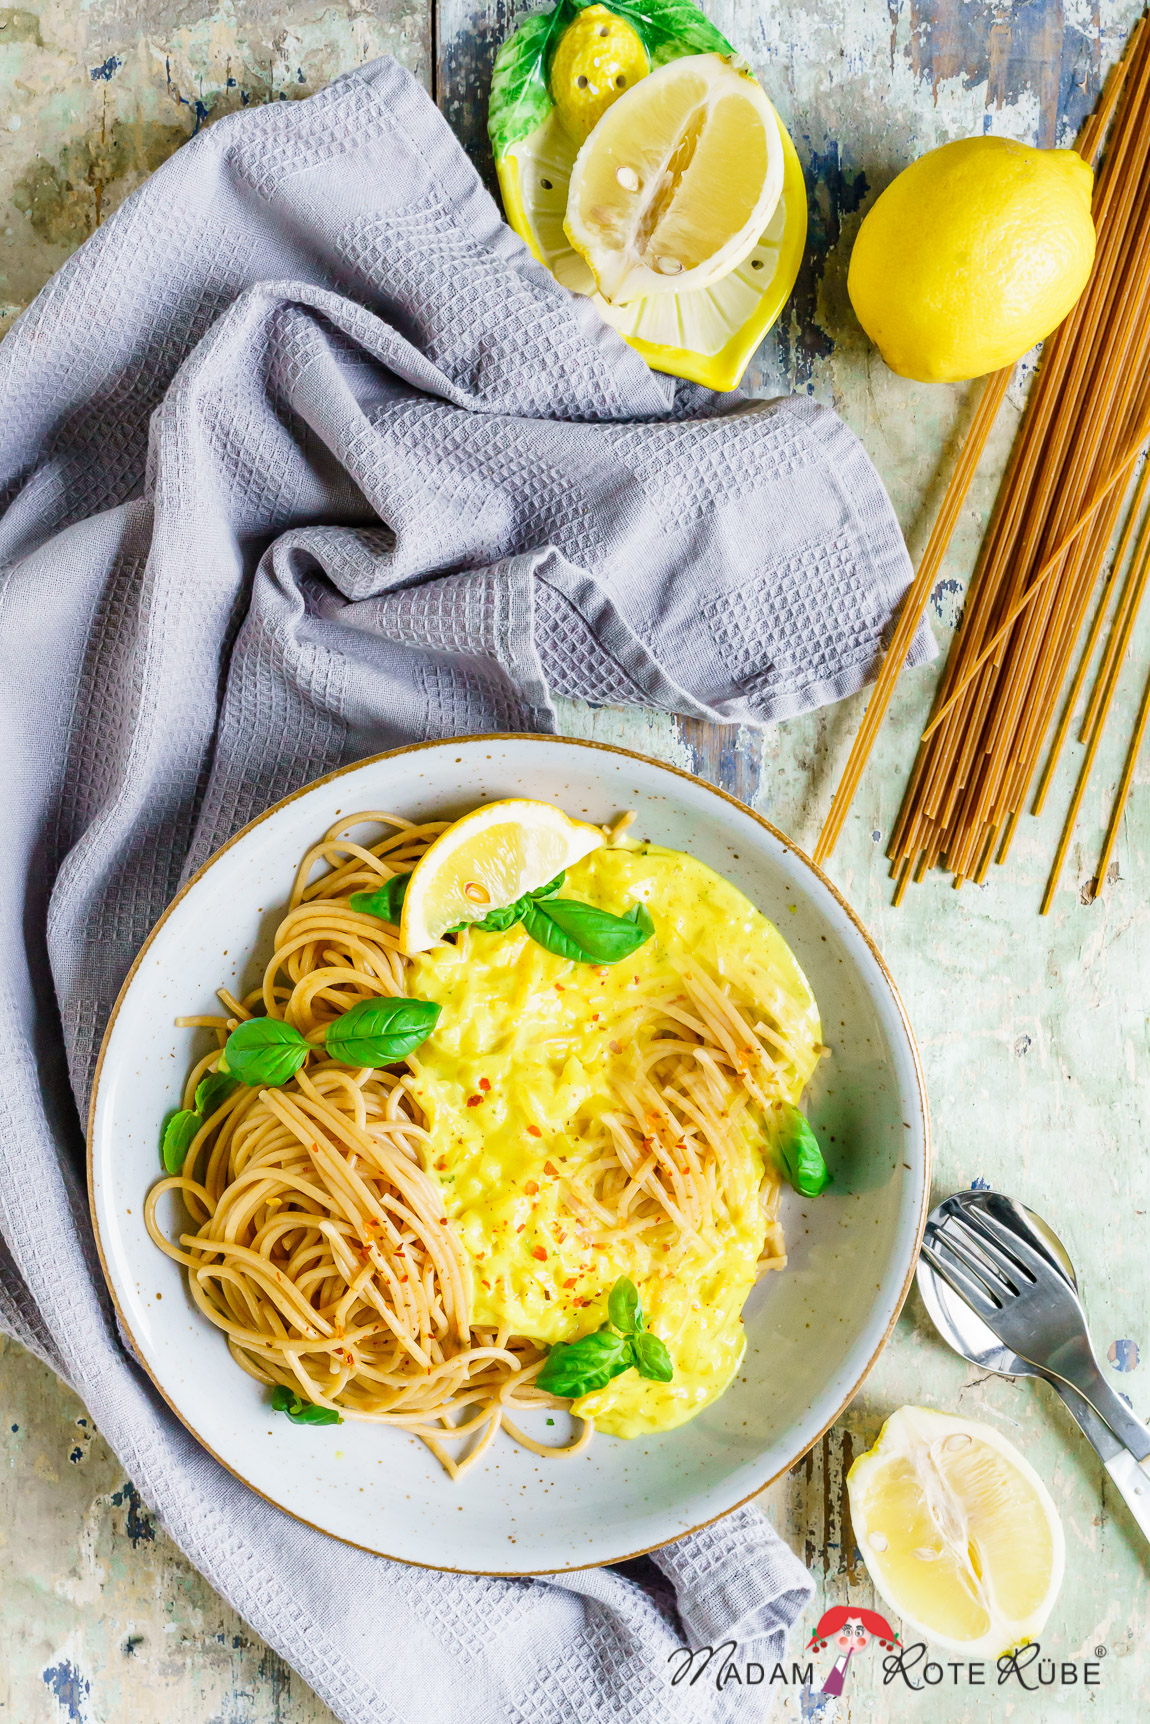 Madam Rote Rübe - Spaghetti mit Limonensauce und Basilikum